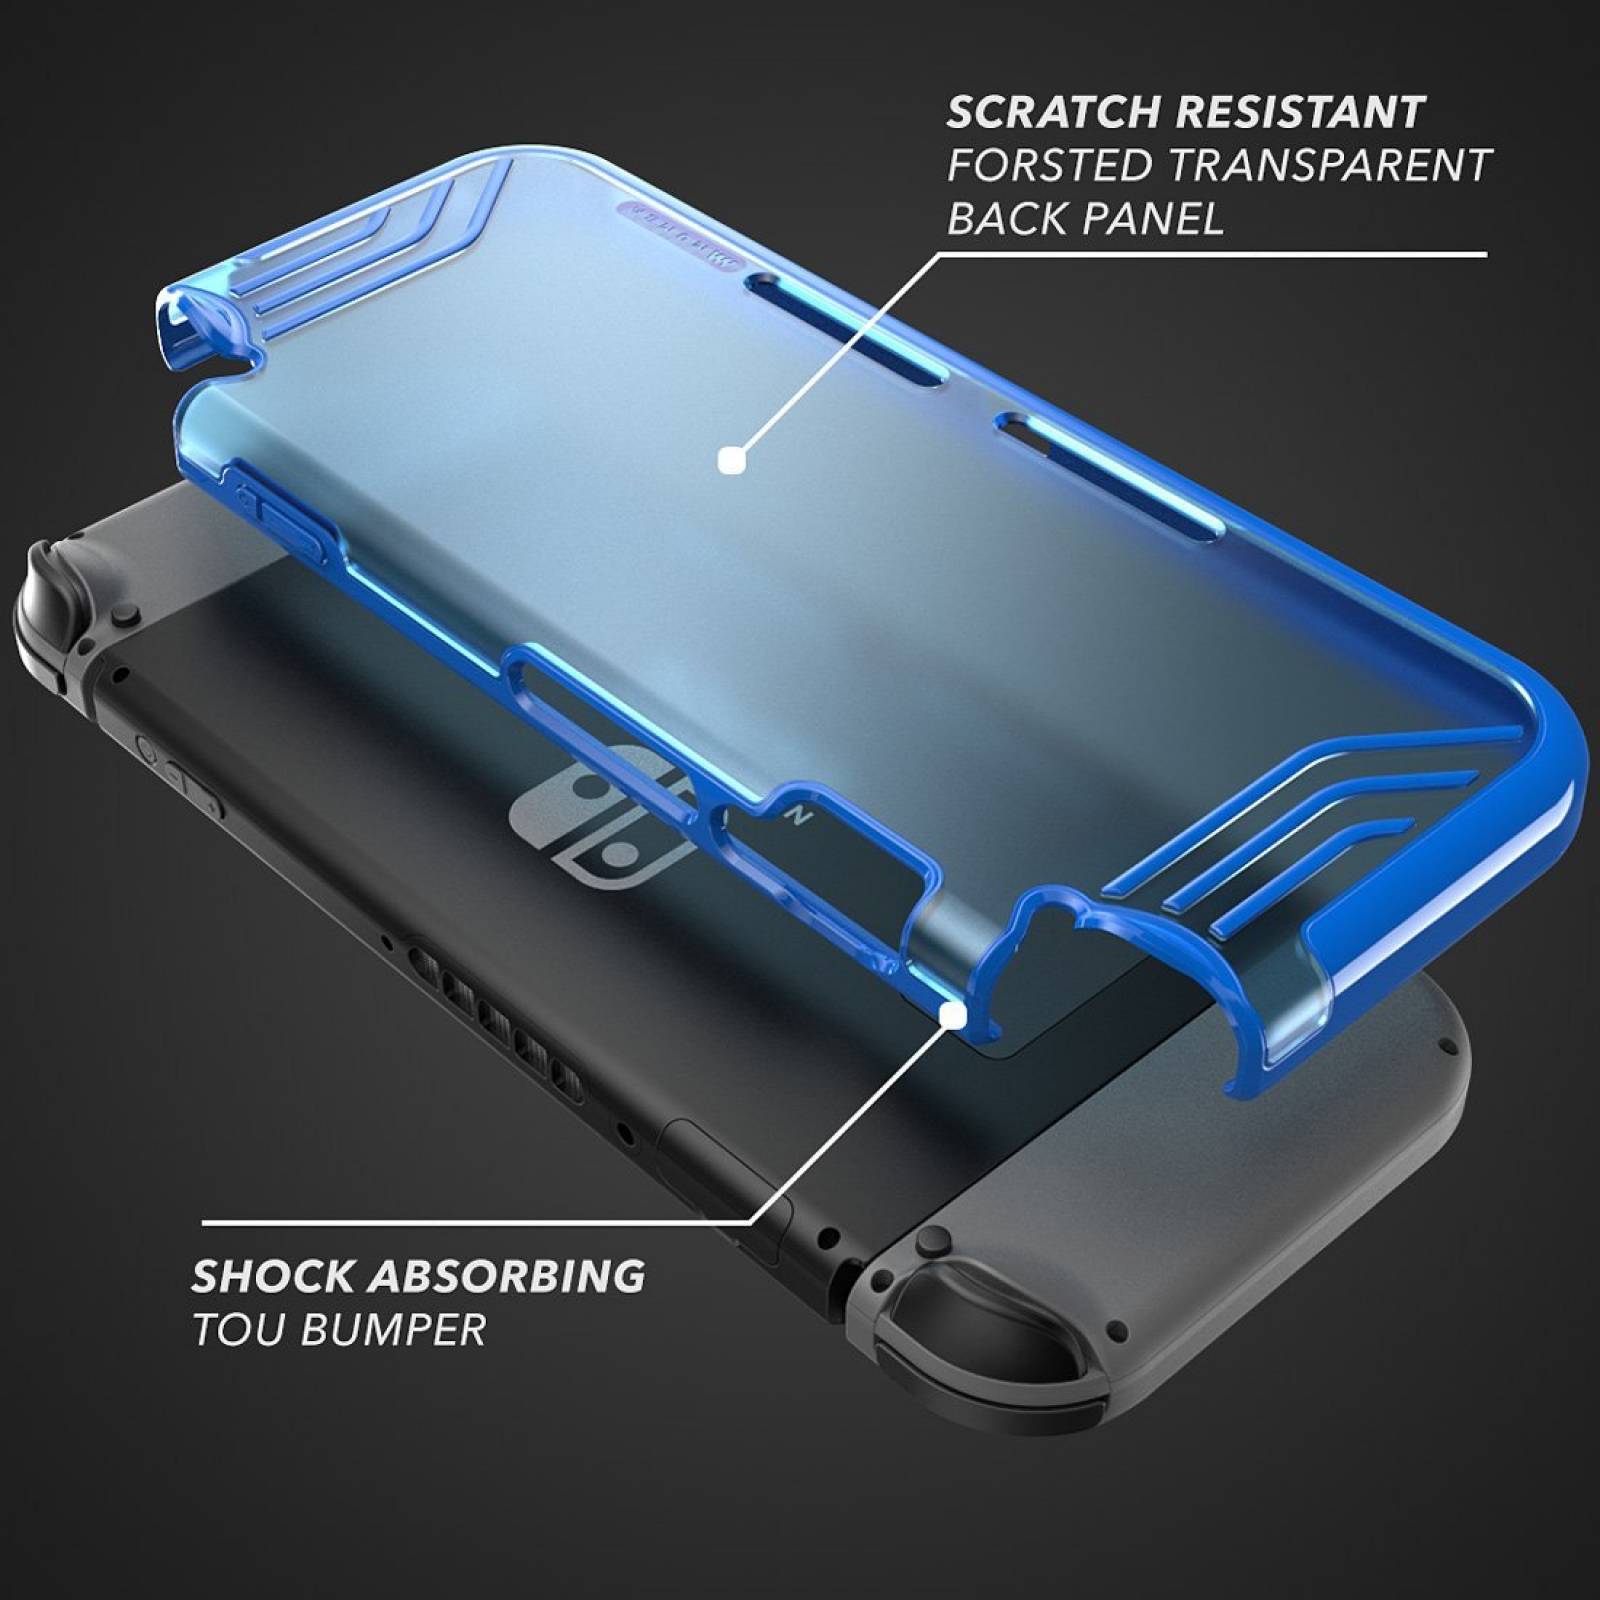 Carcasa Protectora Mumba Para Consola Nintendo Switch -azul